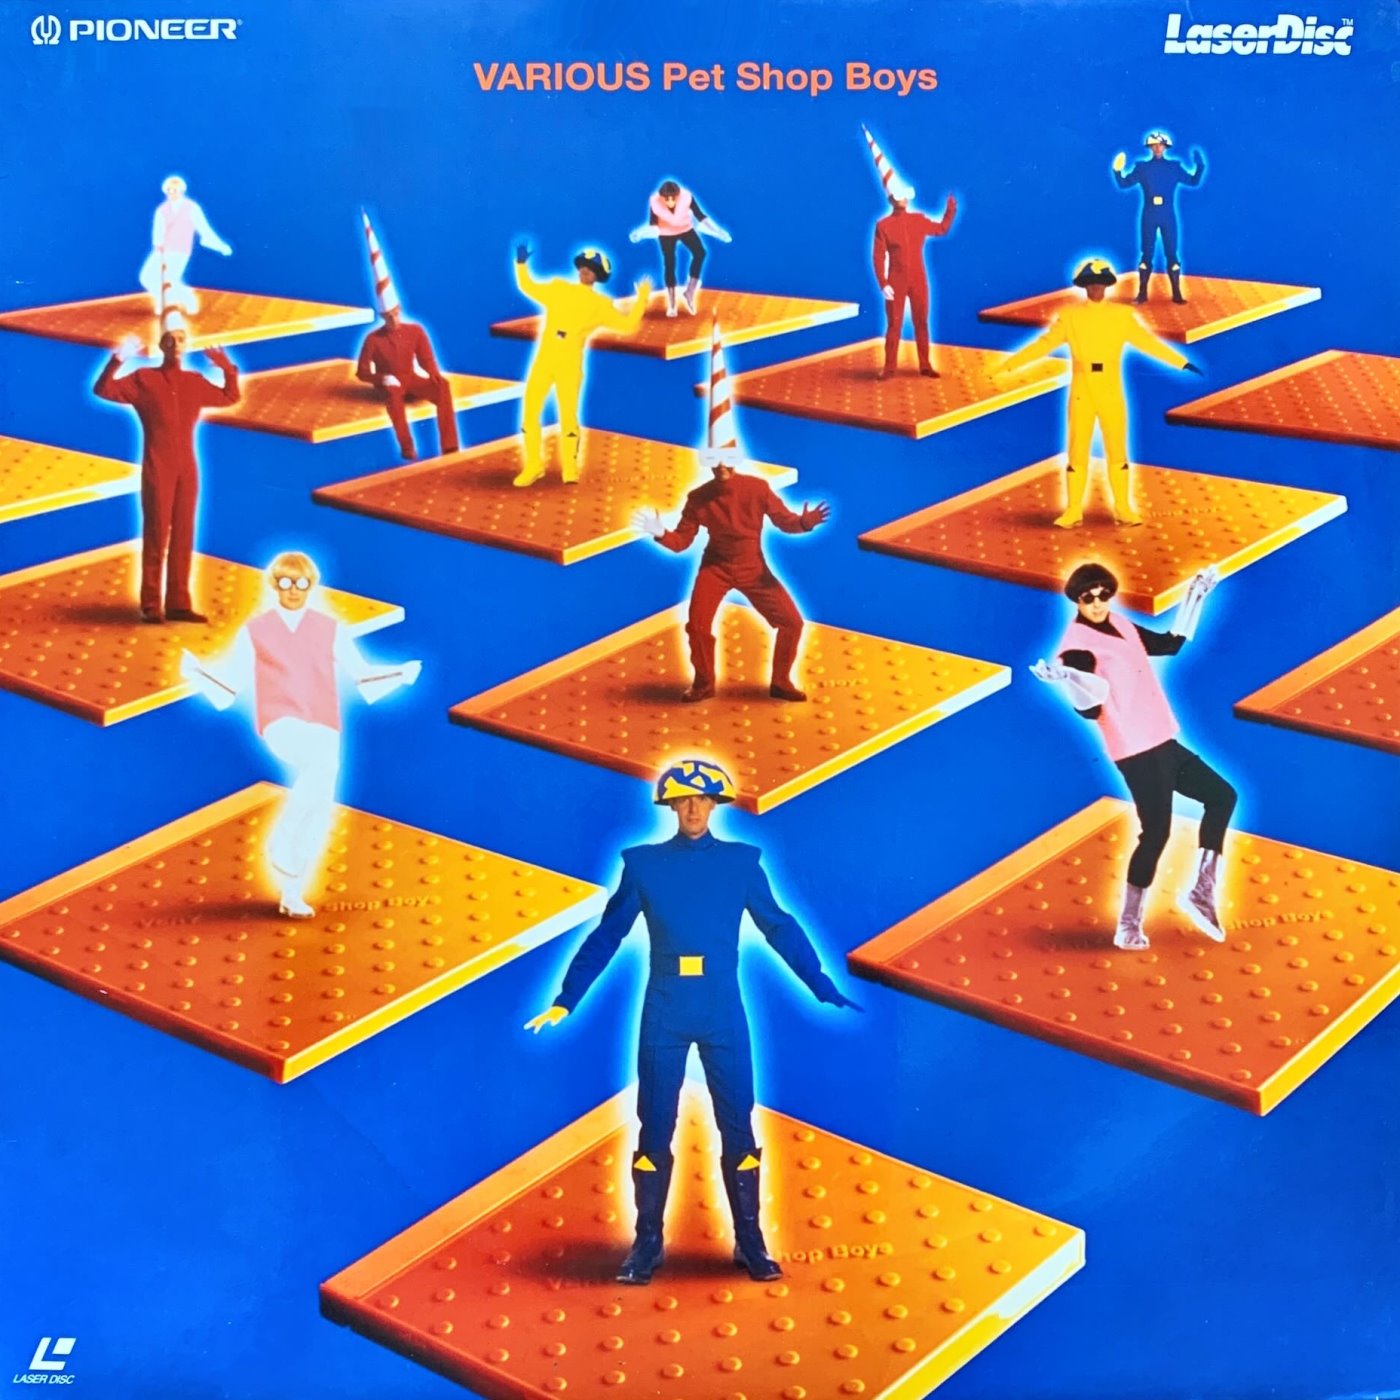 Cover - Pet Shop Boys - Various.jpg